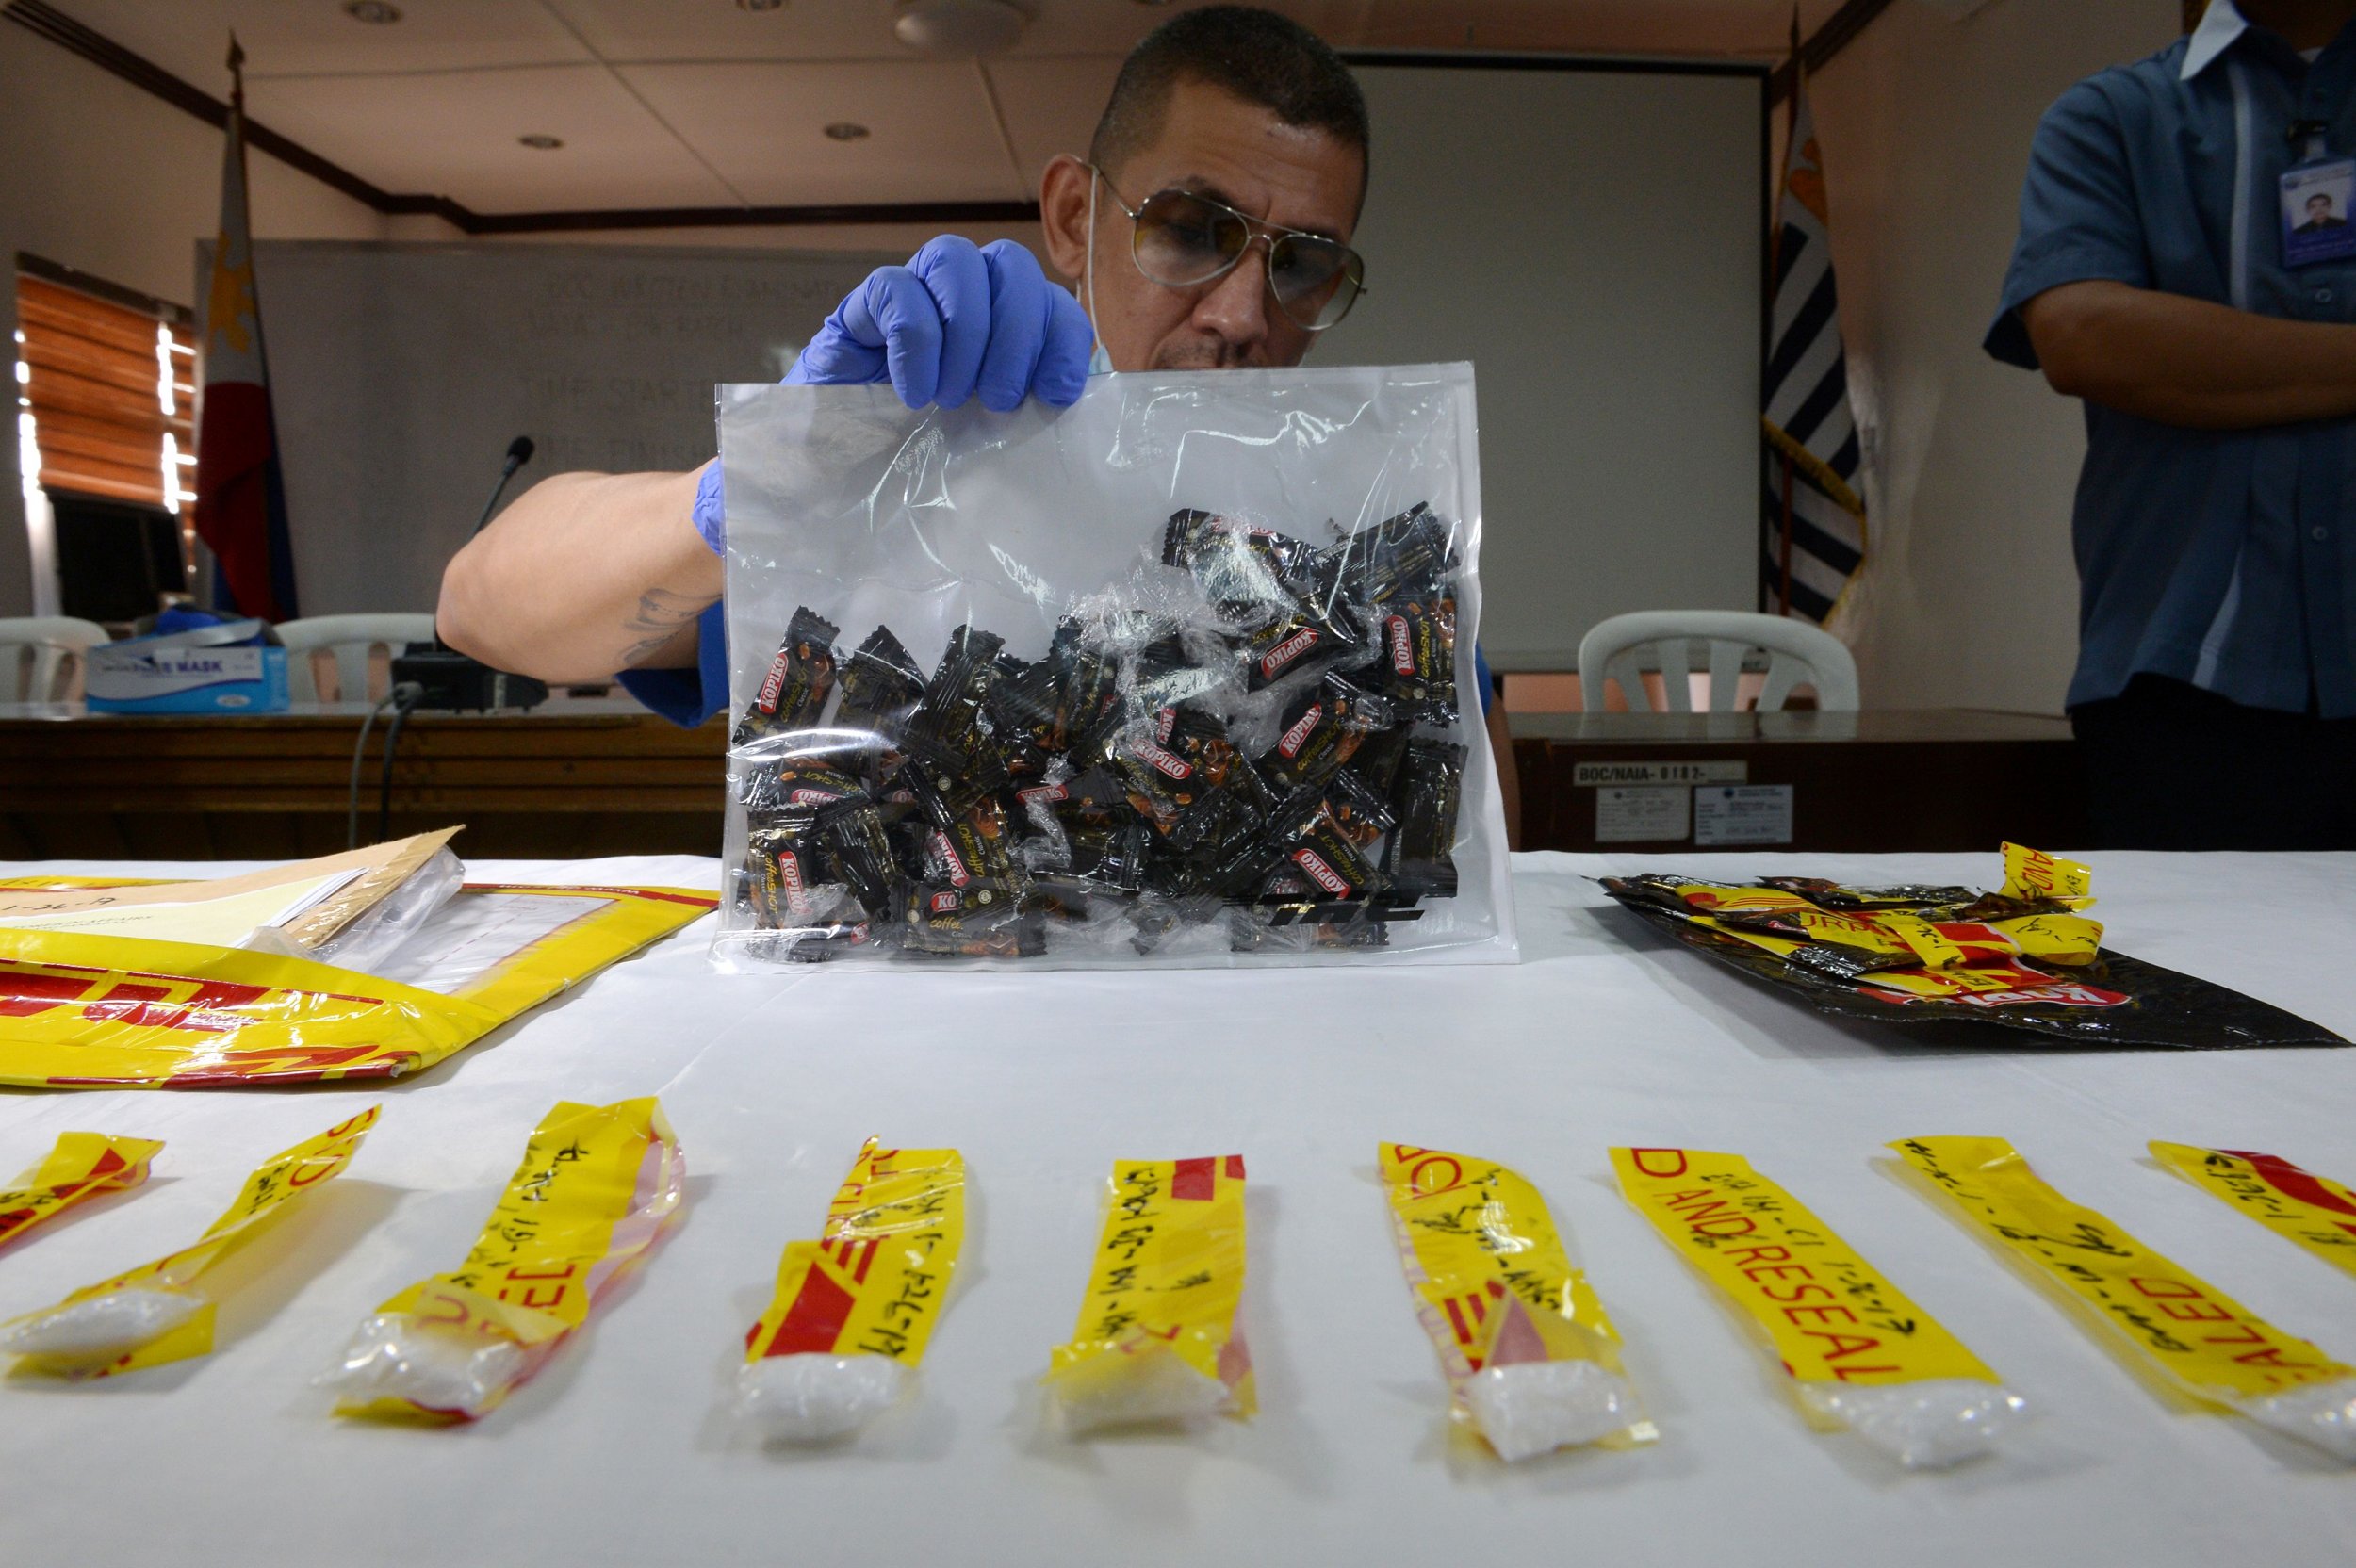 Philippines destroys $39 million worth of fake goods